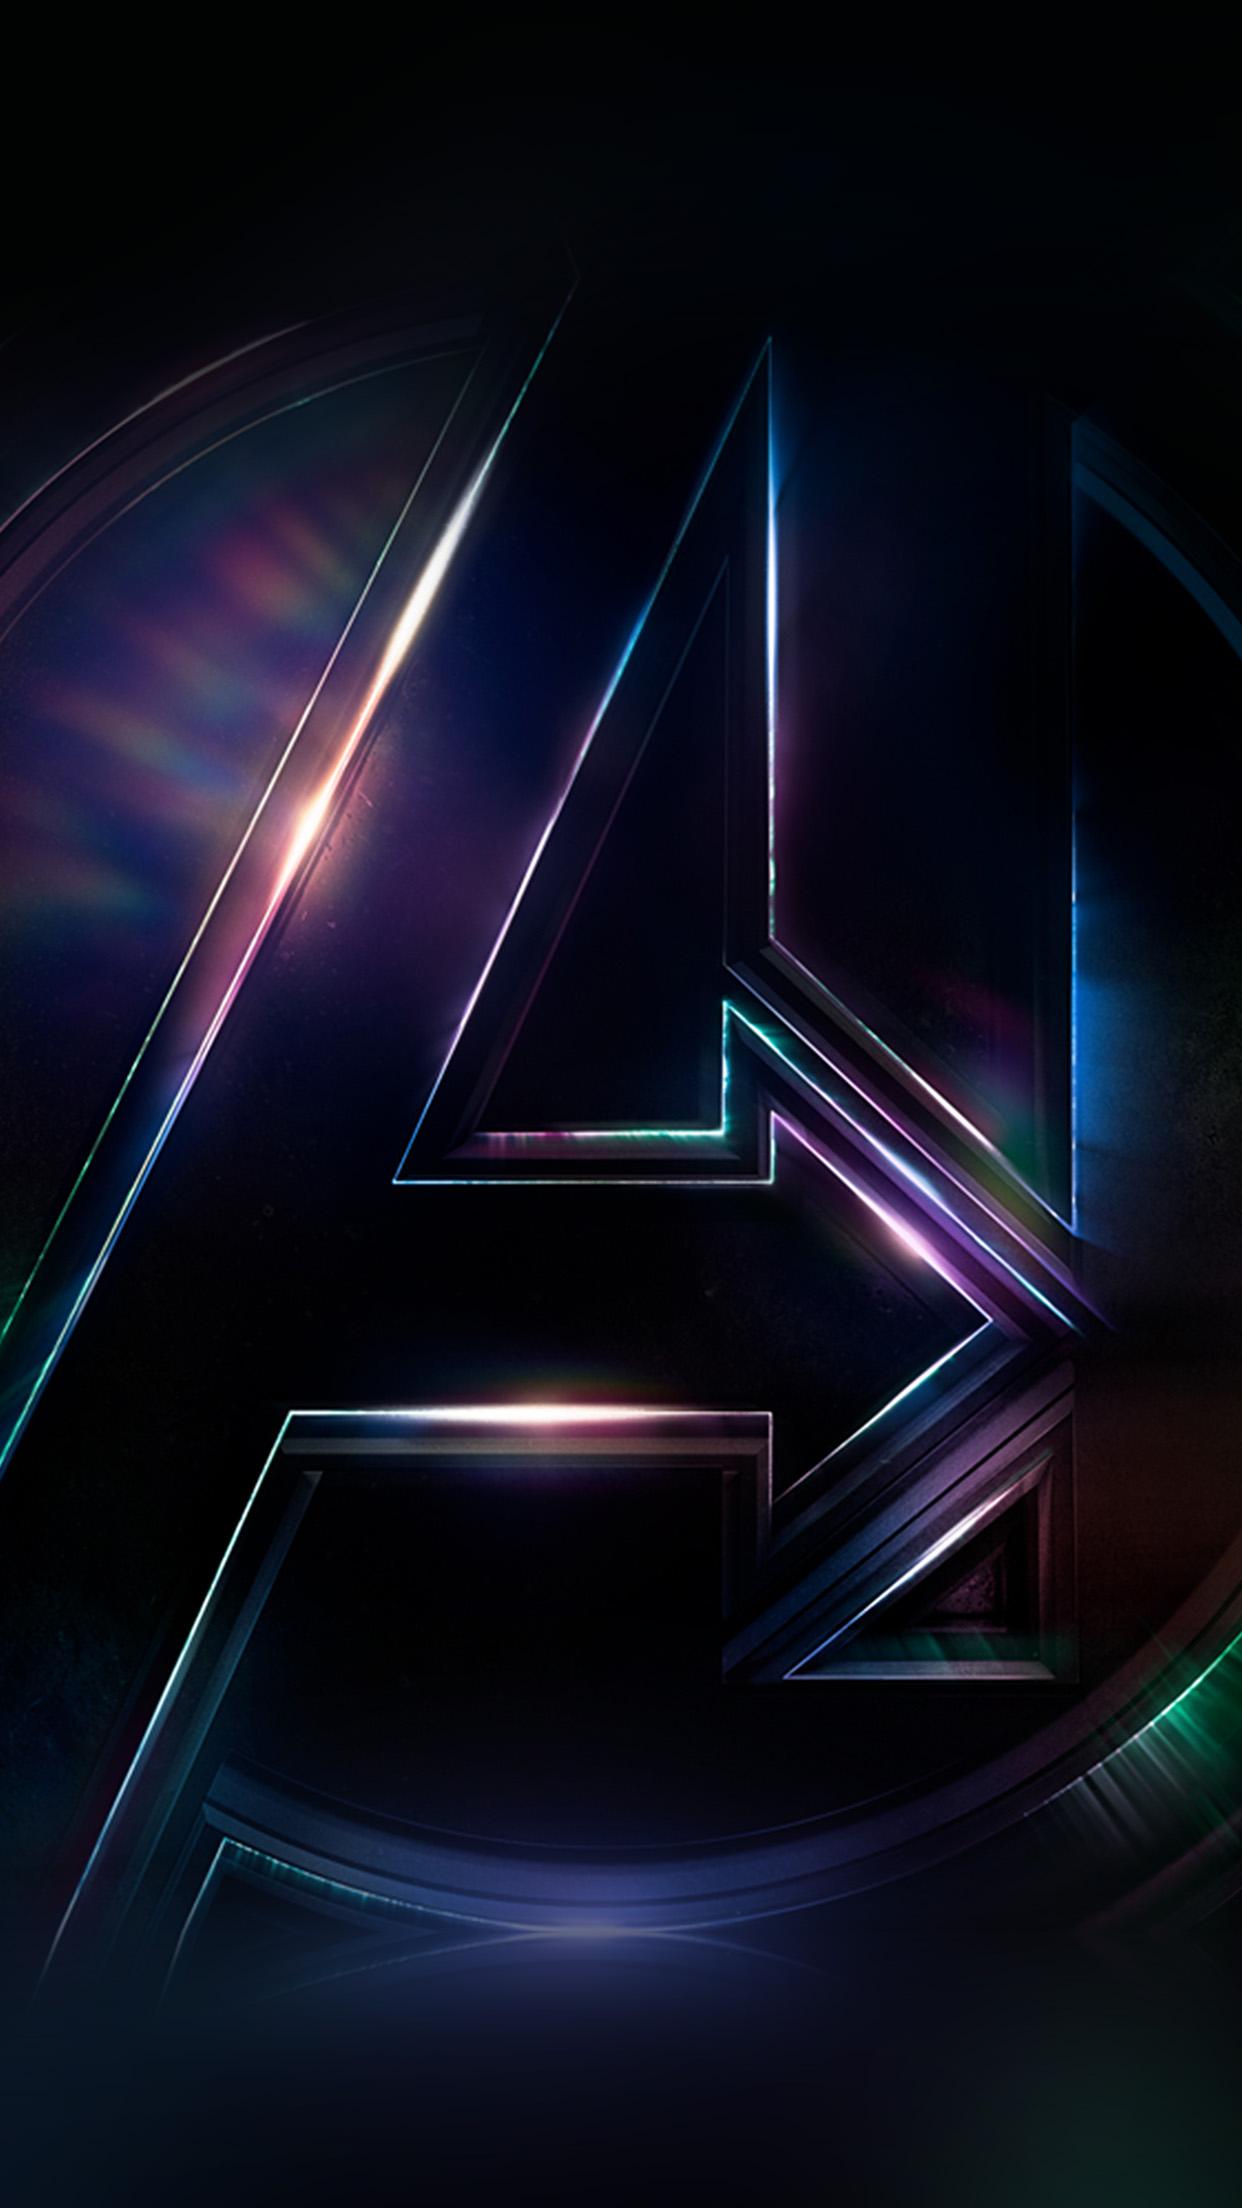 iPhone 6 wallpaper. avengers logo